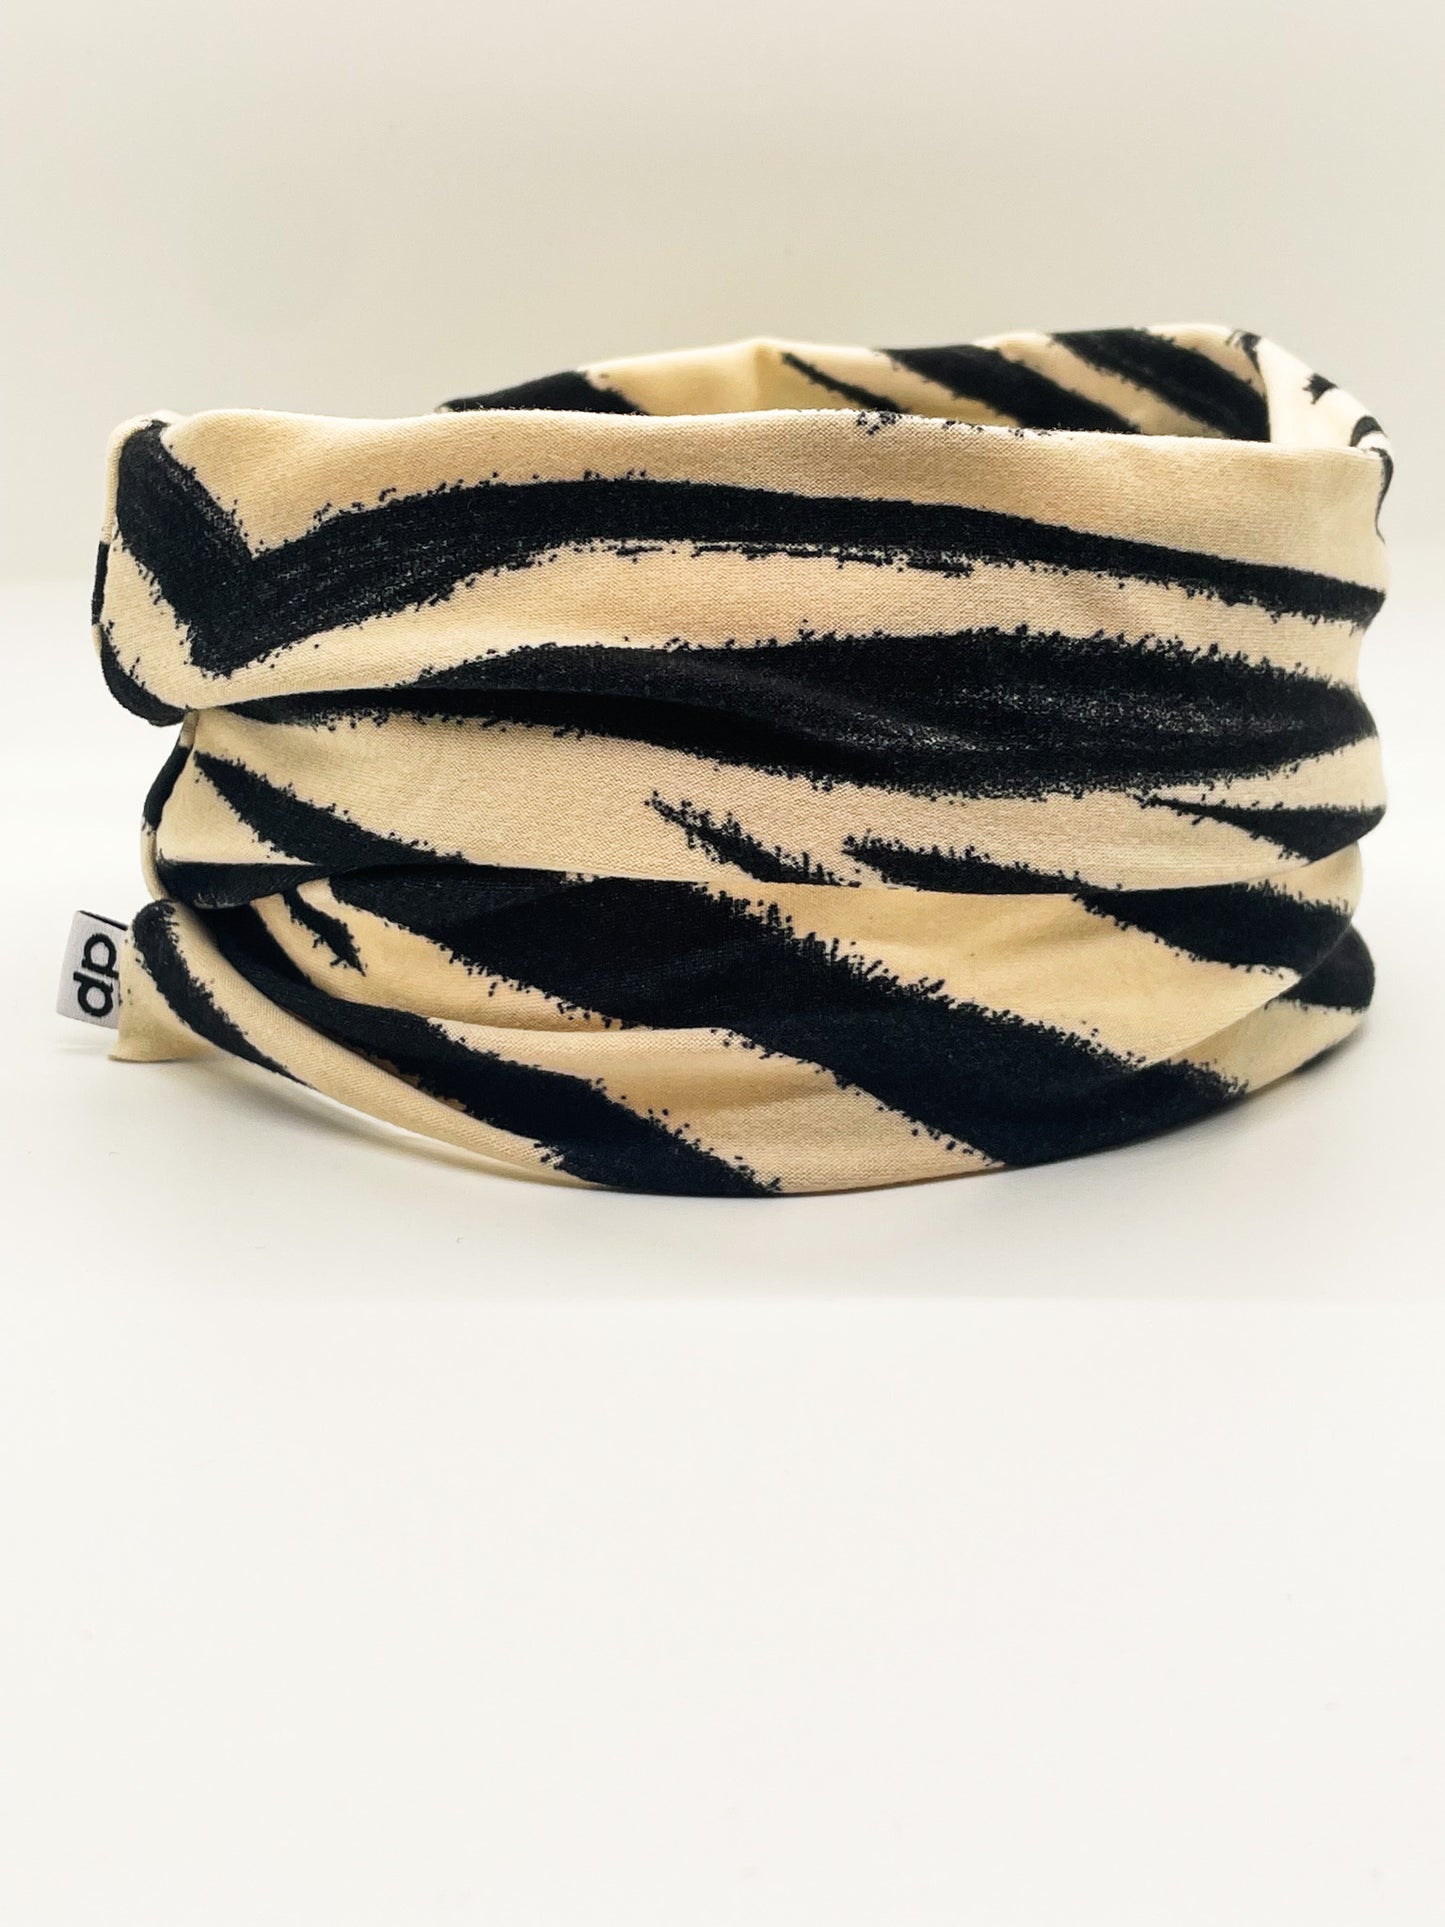 Zebra Headband